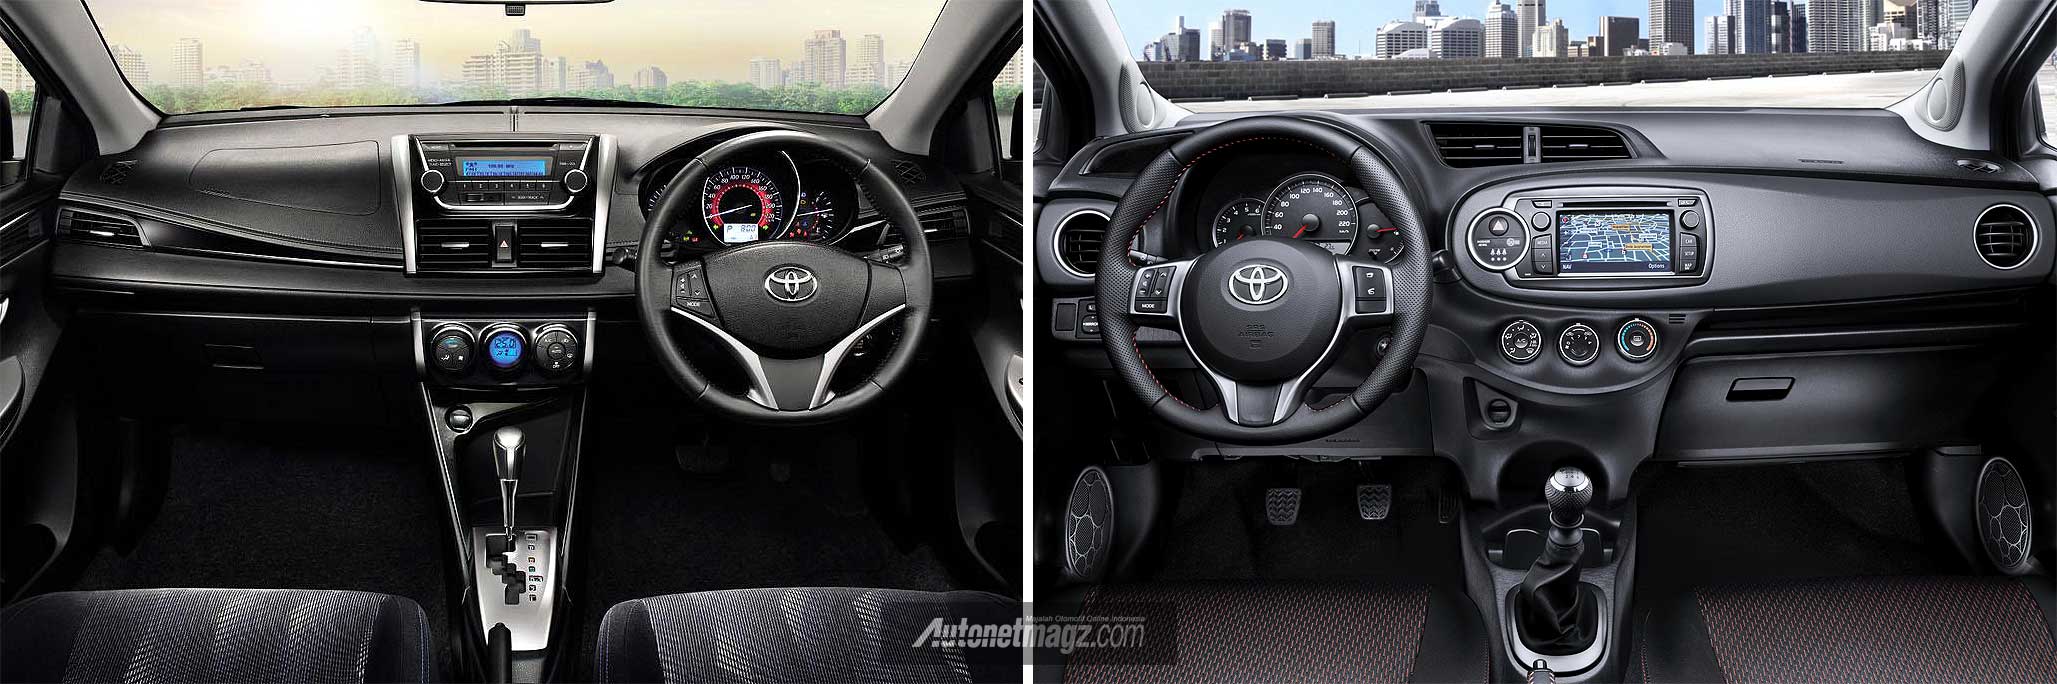 Komparasi, Perbedaan interior Toyota Yaris 2014 versi Asia (kiri) dan versi USA (kanan): Toyota Yaris Lele Atau Toyota Yaris USA?